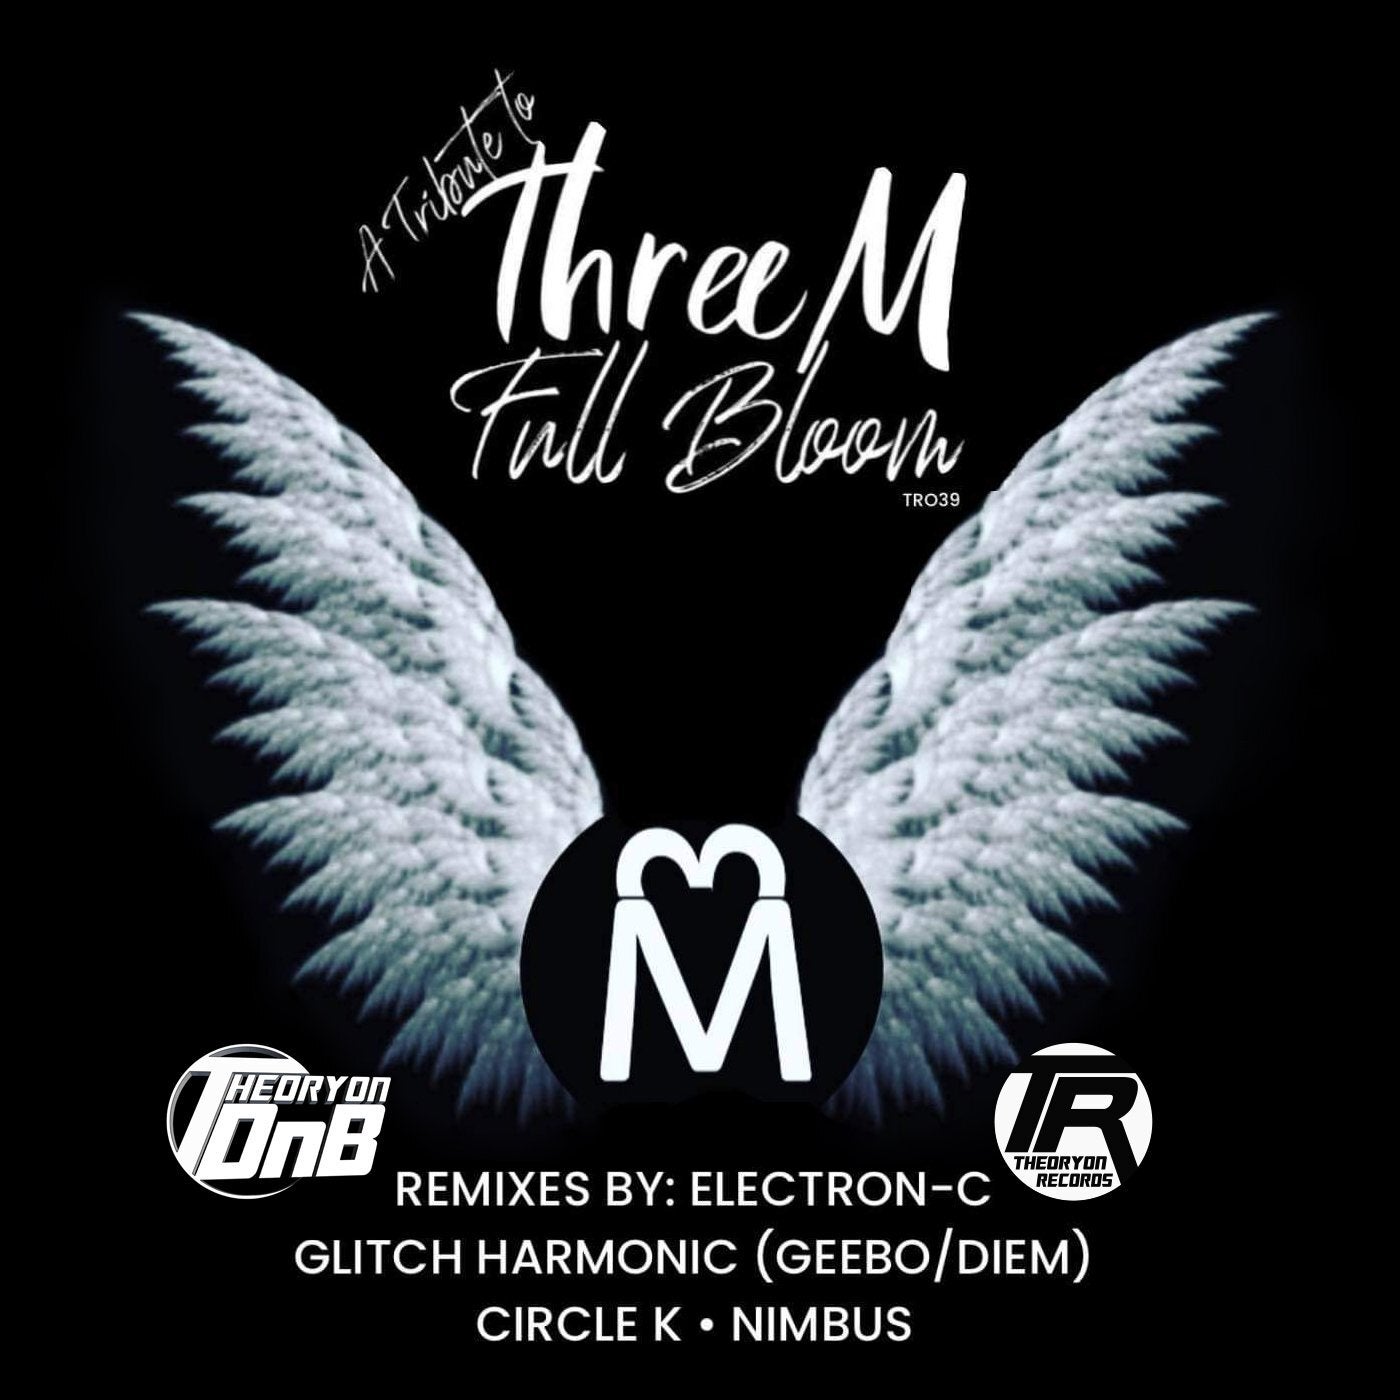 Full Bloom (A Tribute to ThreeM)